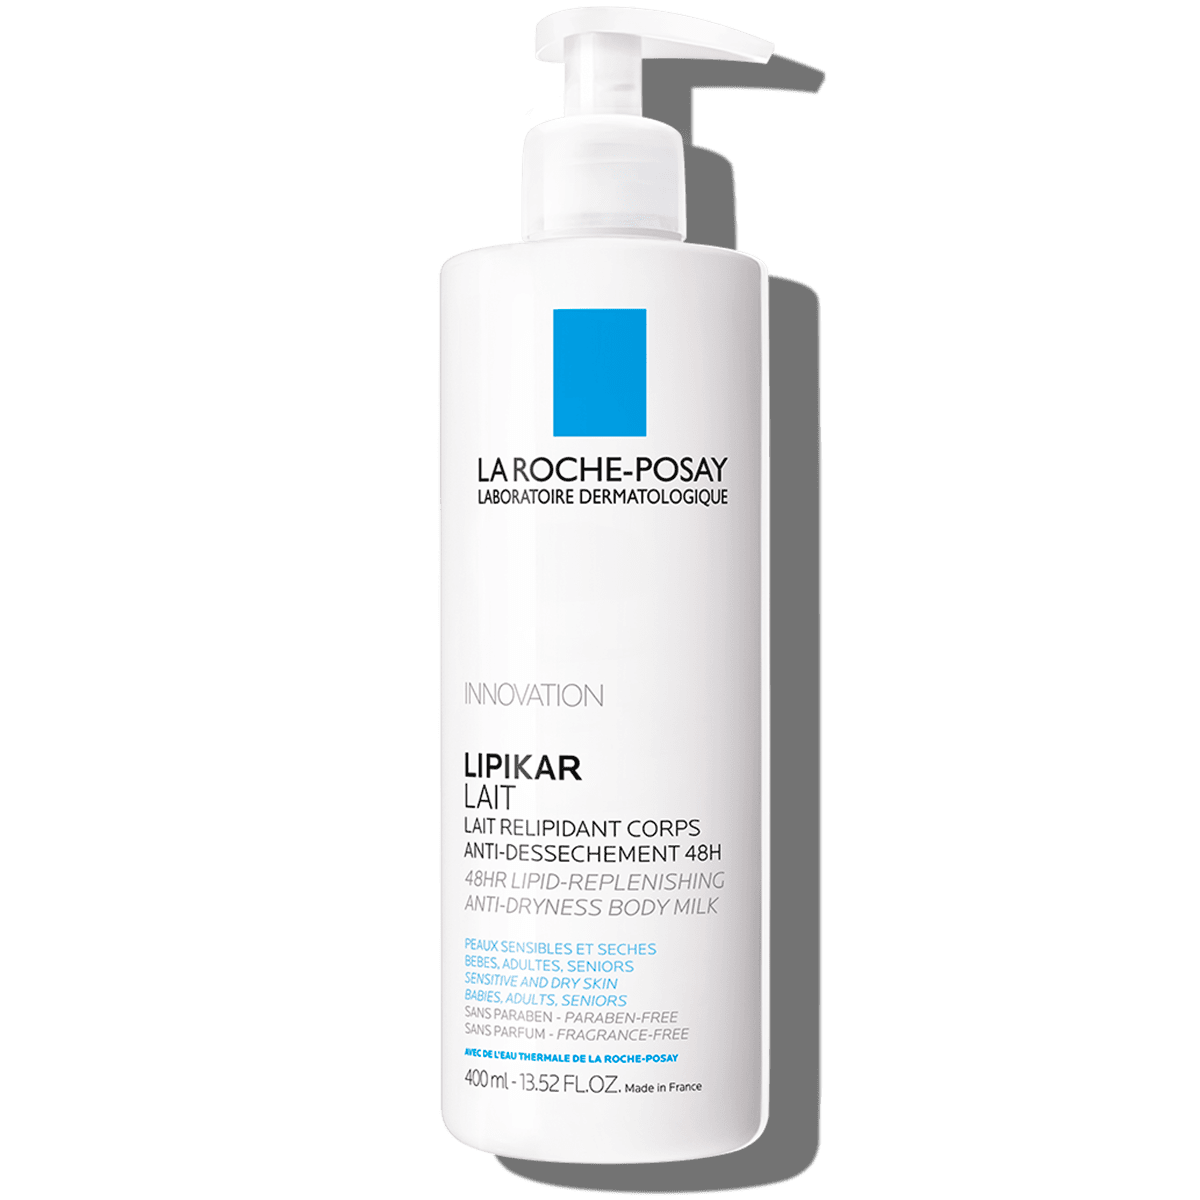 La Roche-Posay Lipikar Lait Body Lotion for Dry Skin 400ml